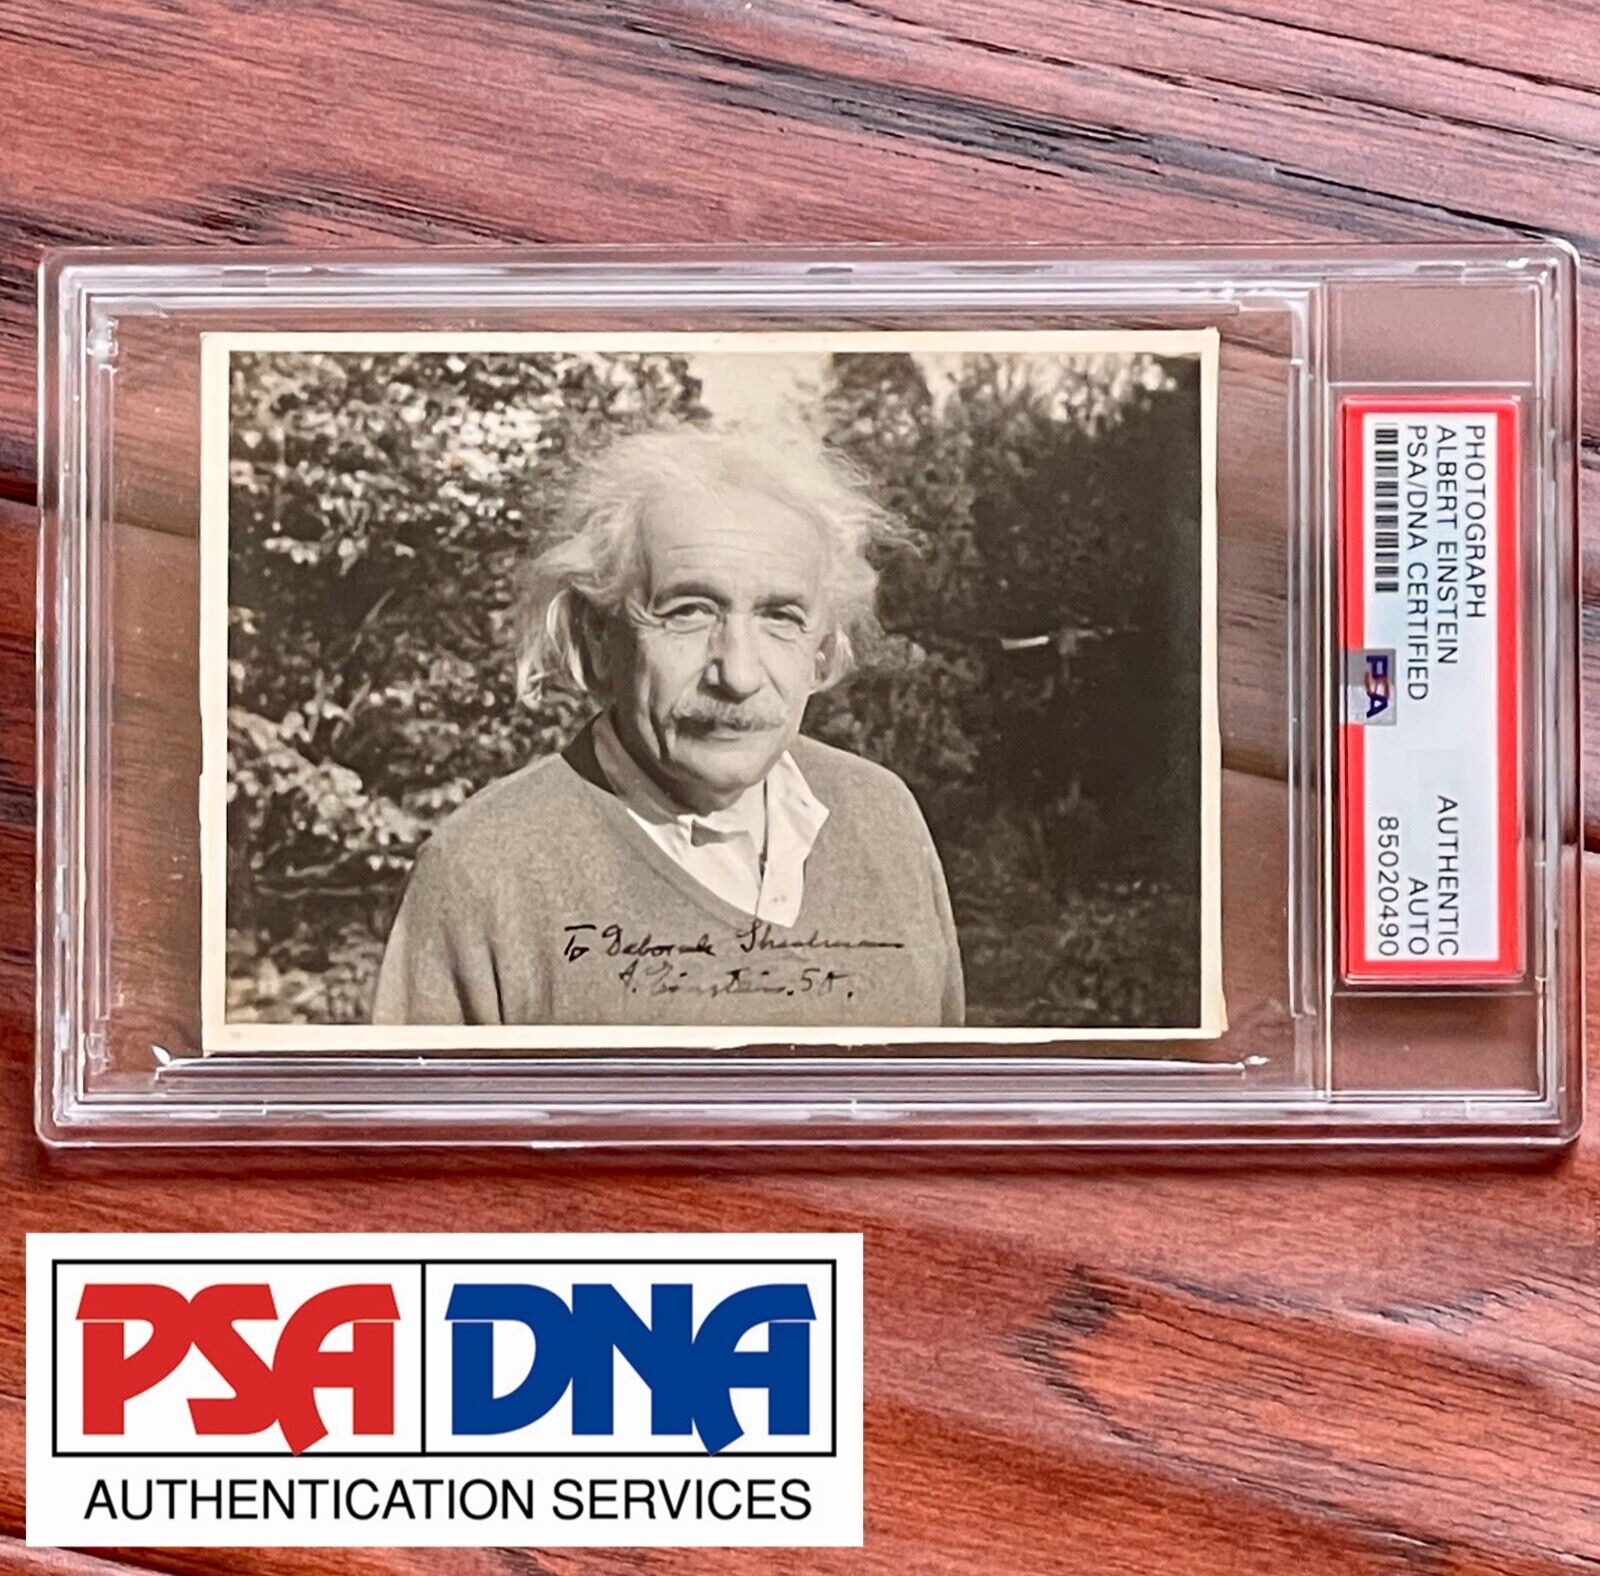 ALBERT EINSTEIN * PSA/DNA * Autograph Candid 1950 PHOTOGRAPH Portrait Signed